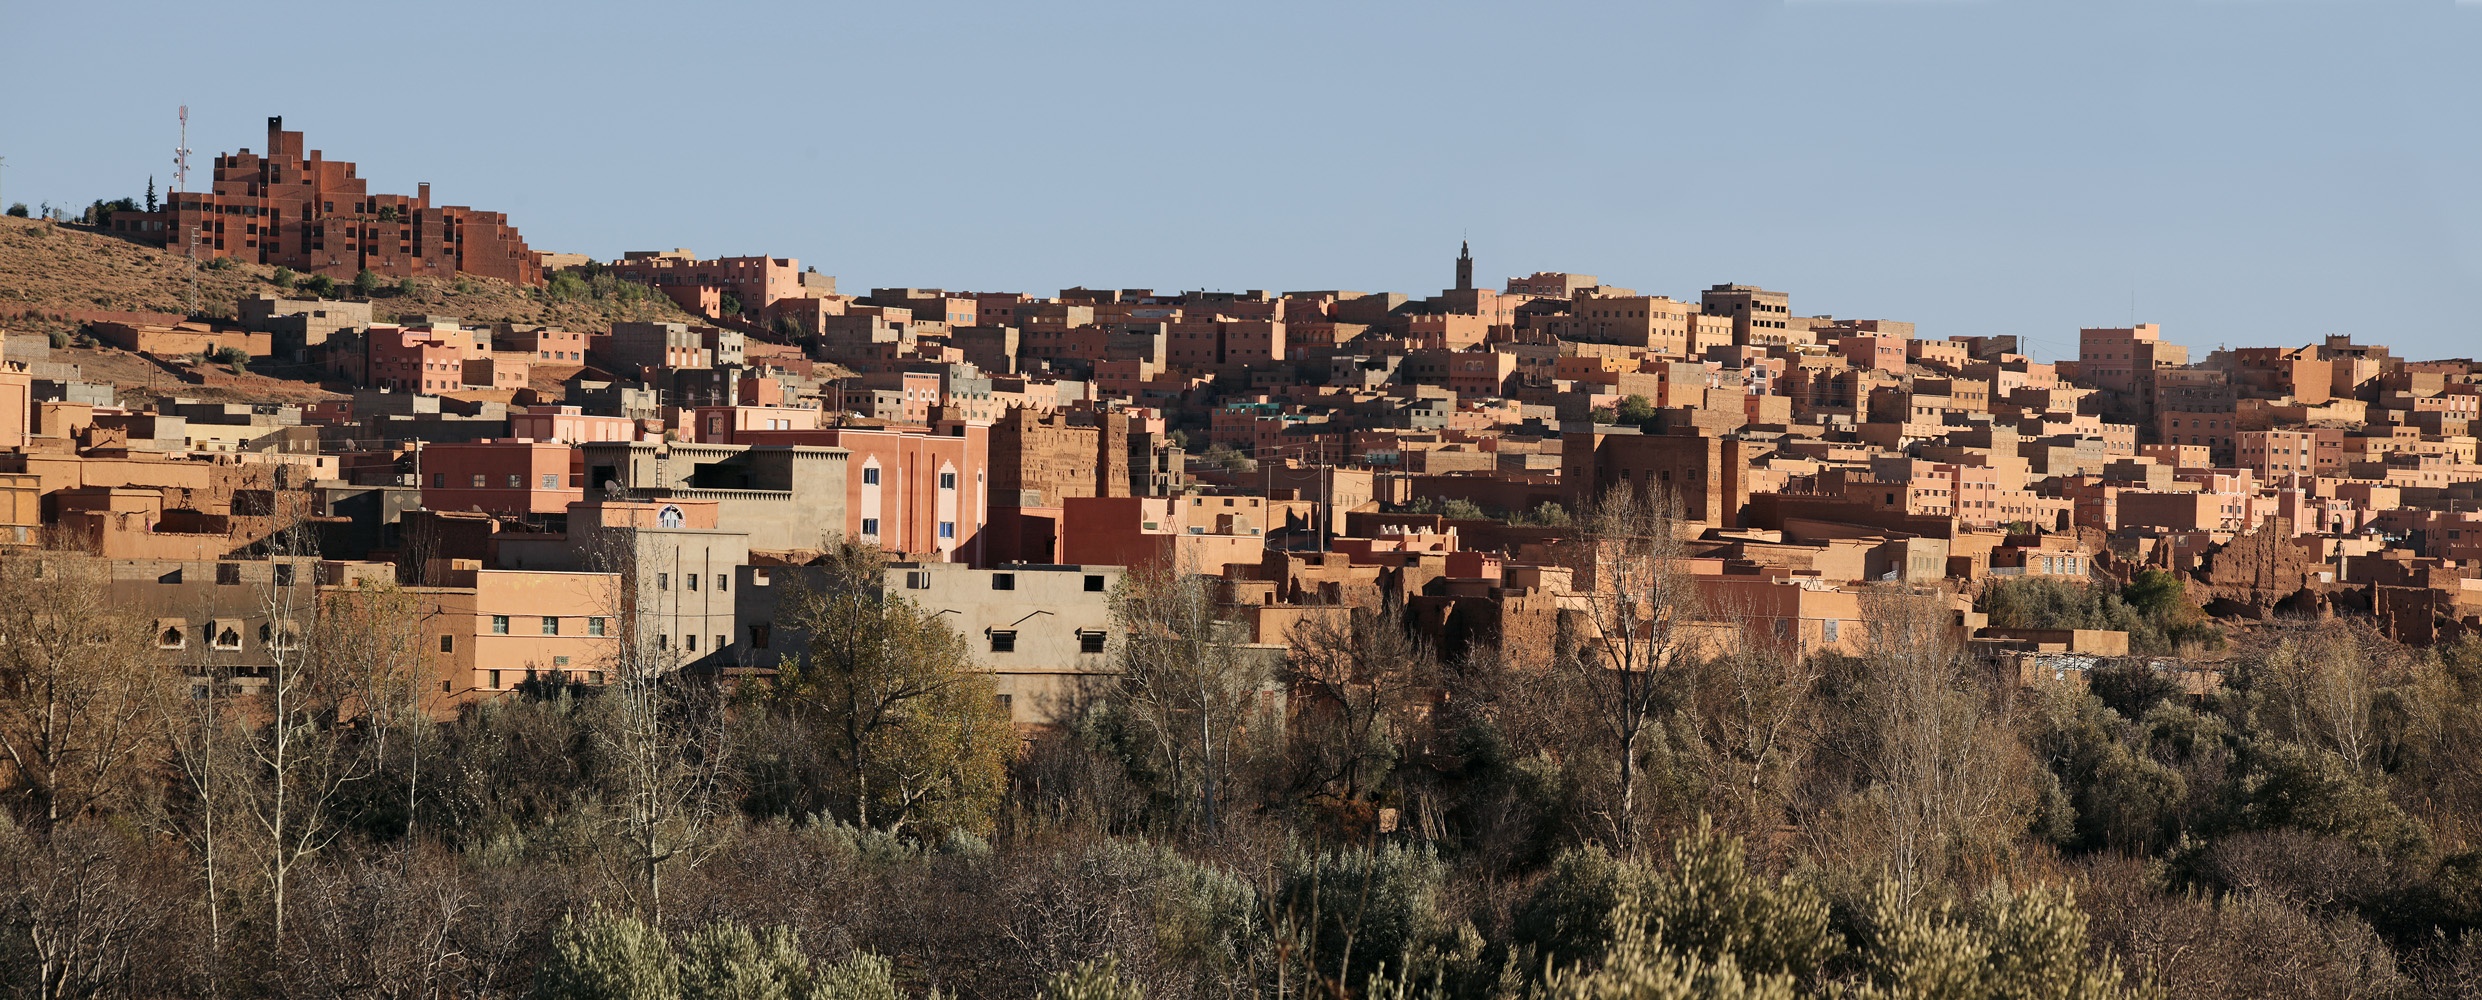 bill-hocker-boumalne-dades-morocco-2012